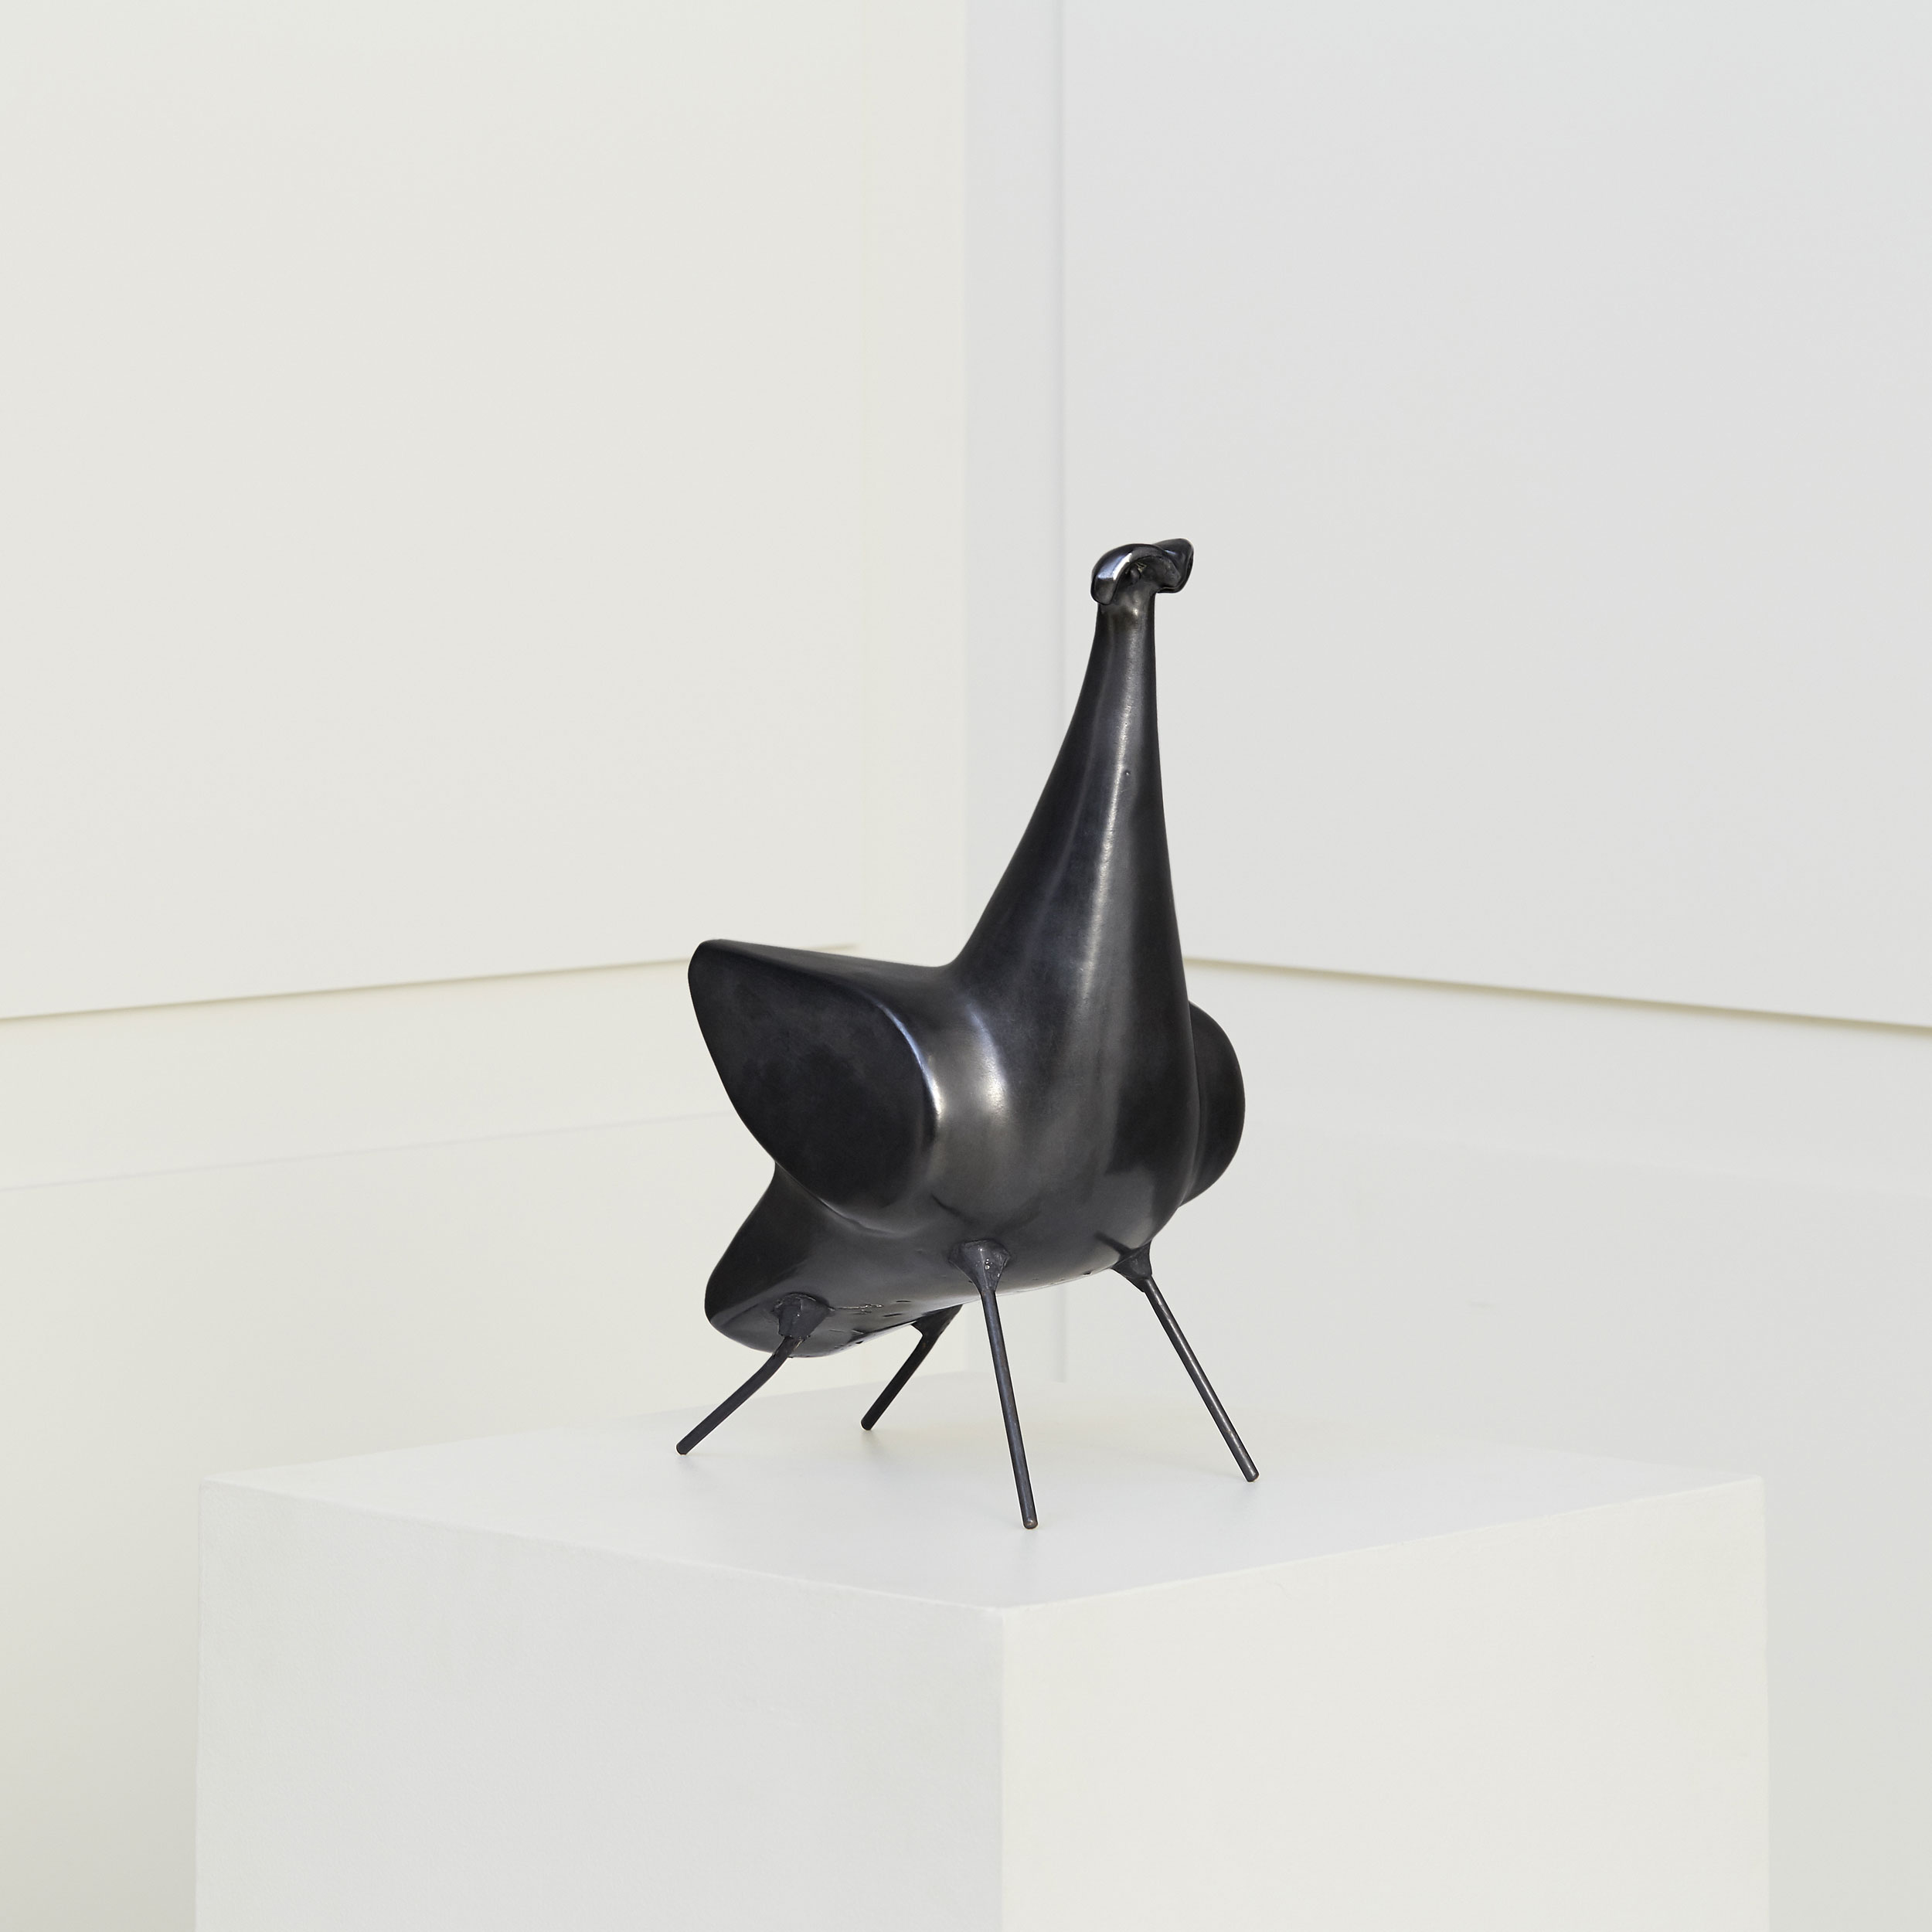 Georges Jouve, «4-legs bird» ceramic sculpture, vue 03